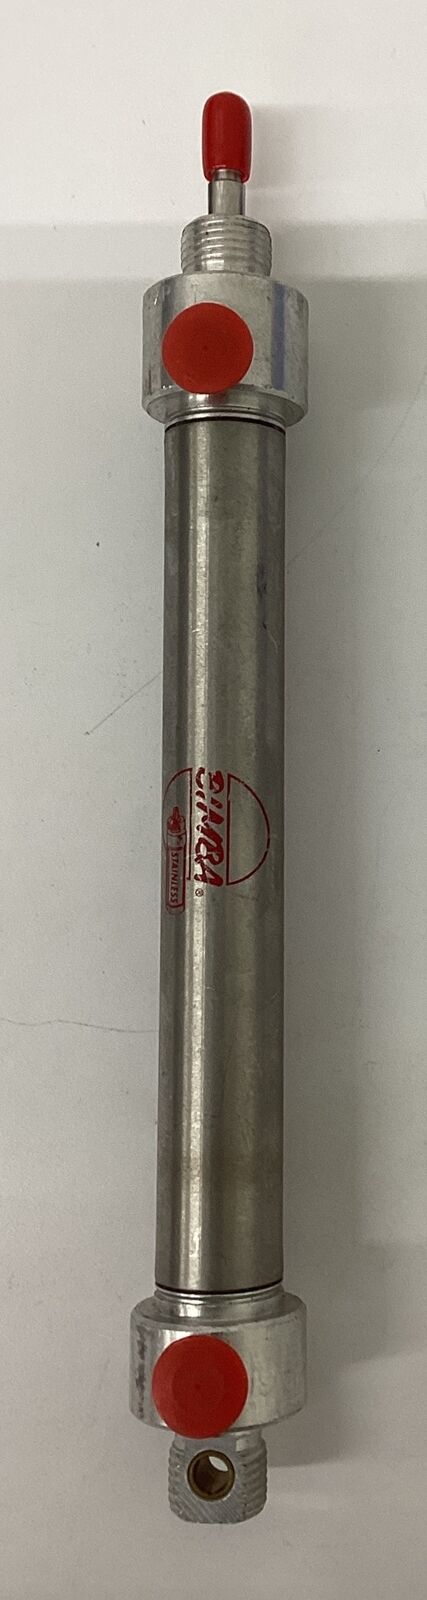 Bimba MRS-044-DXP Pneumatic Cylinder (GR222) - 0